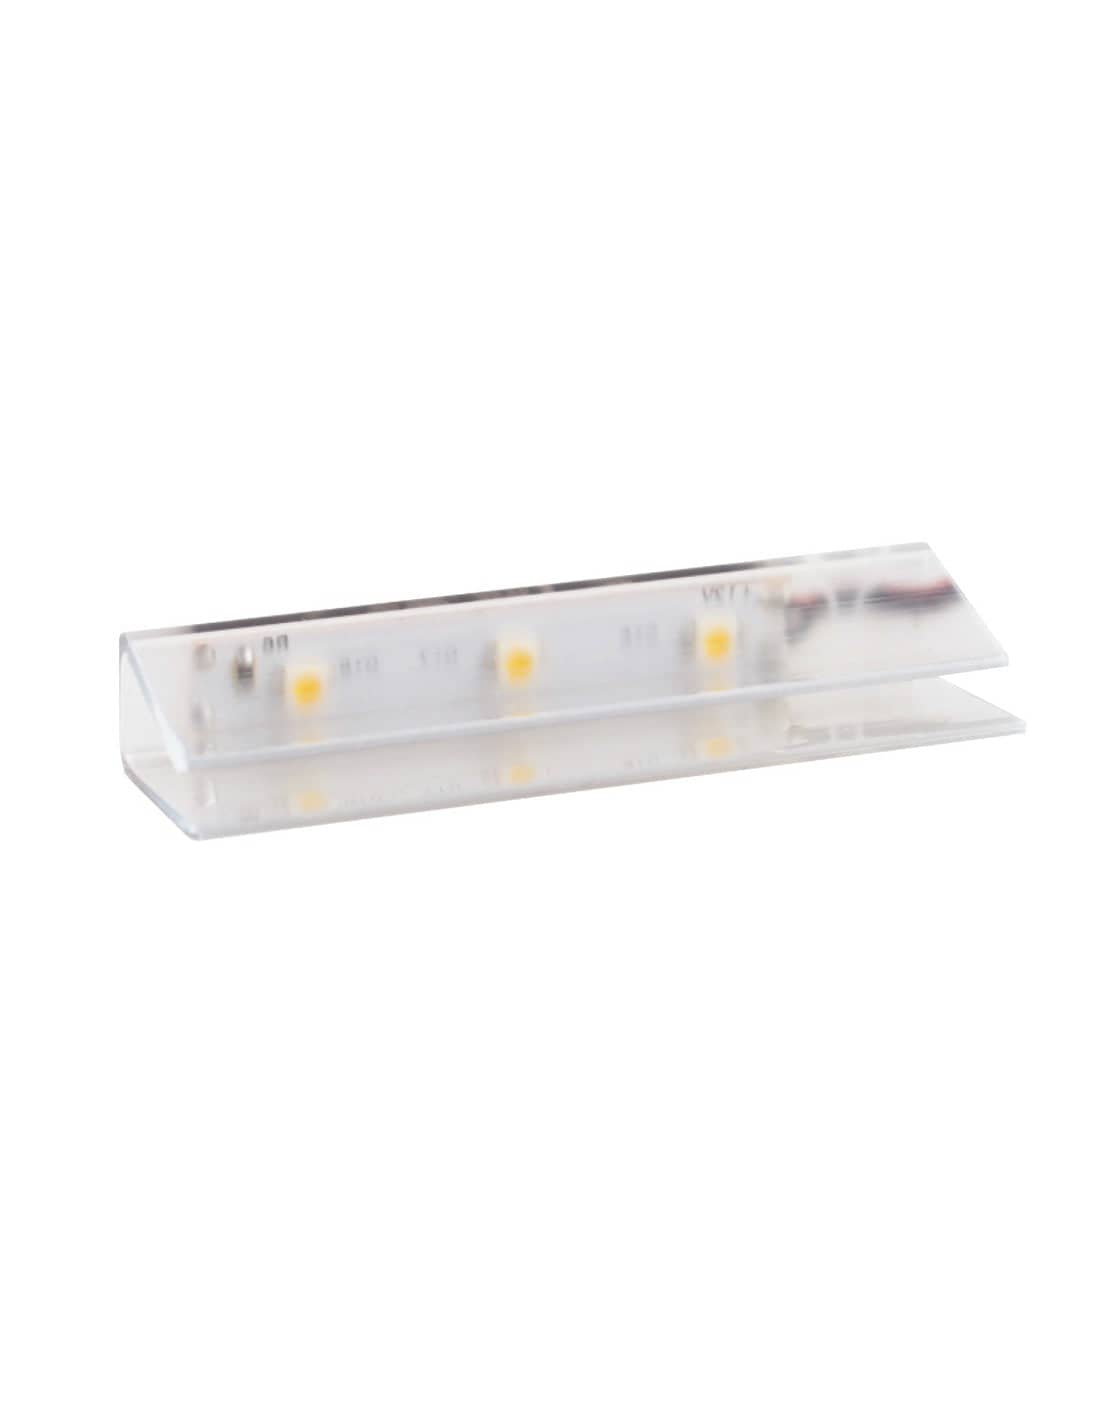 KLIPS - LED Plastic clip 0.25W Neutral White 40K   KLIPS-P-3528-40K-01